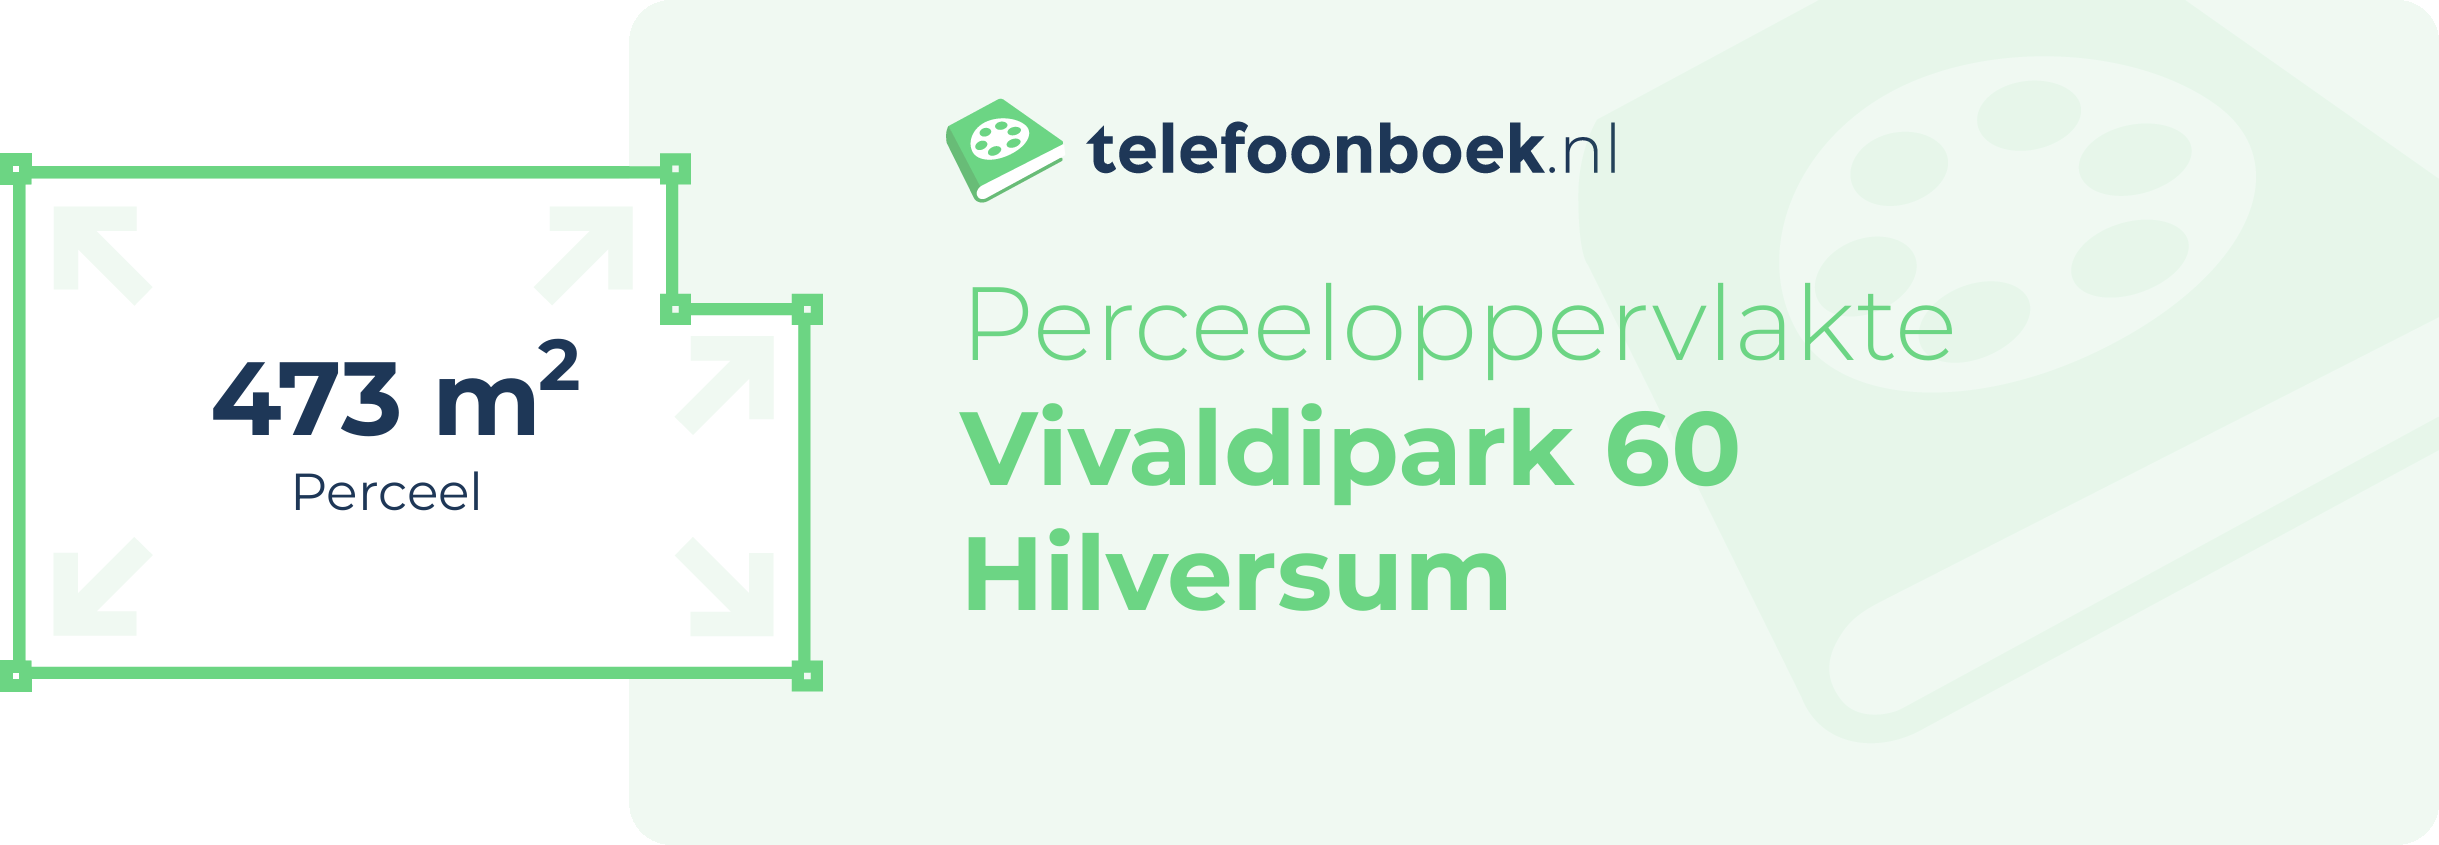 Perceeloppervlakte Vivaldipark 60 Hilversum